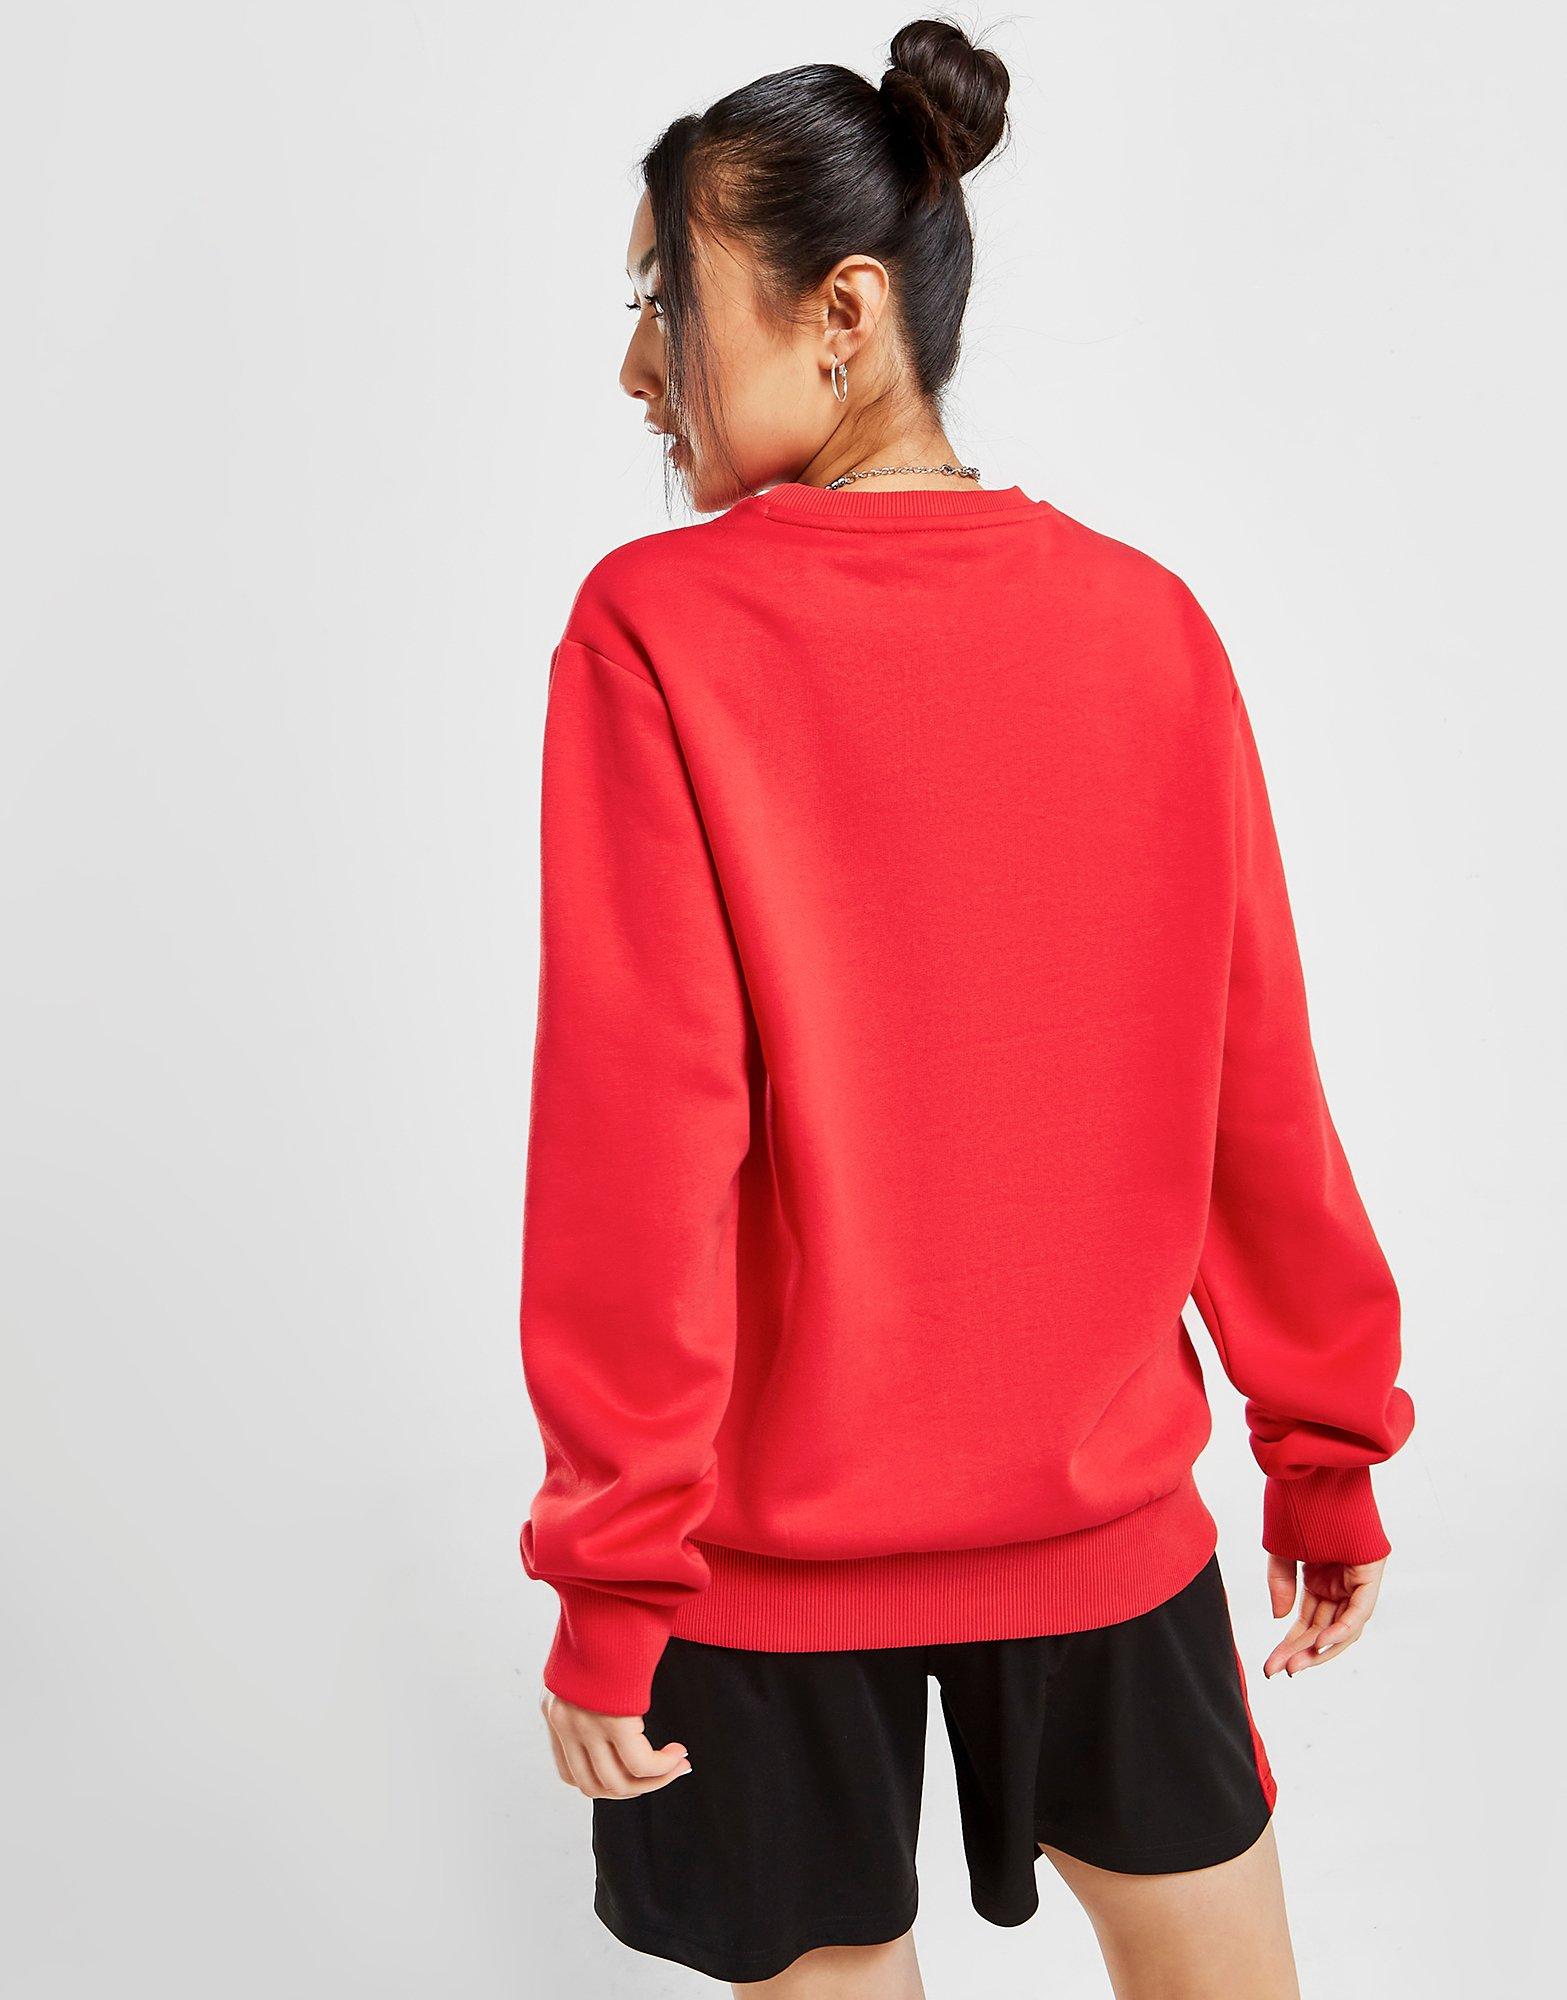 Sweatshirt NBA Red size L International in Cotton - 30790219